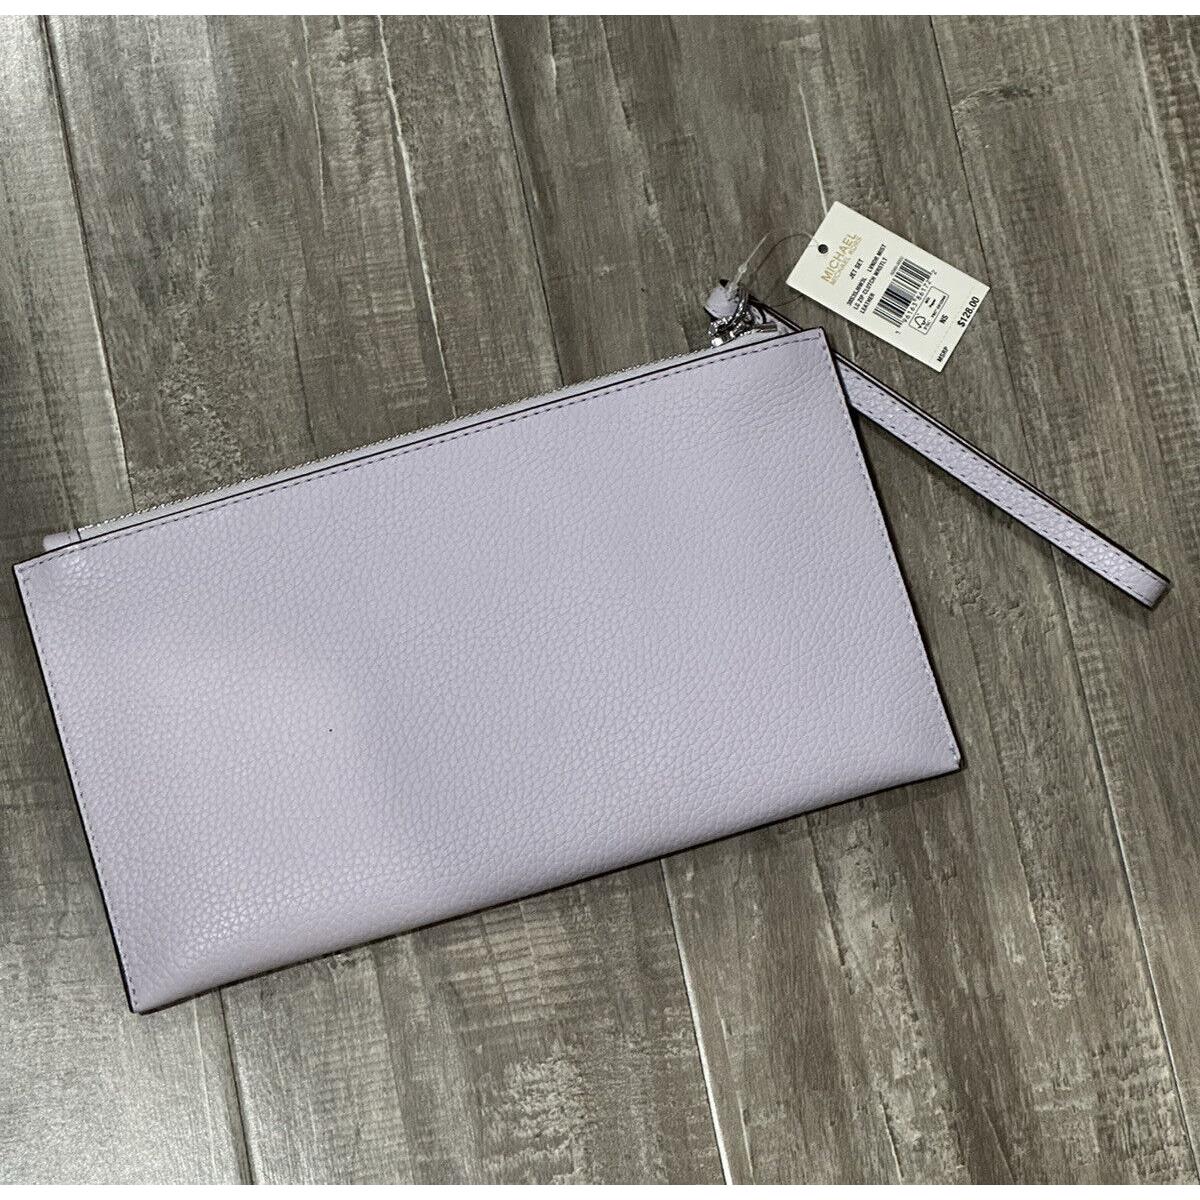 Michael Kors Lavender Mist Ladies Bradshaw Small Leather Convertible  Shoulder Bag In Purple | ModeSens